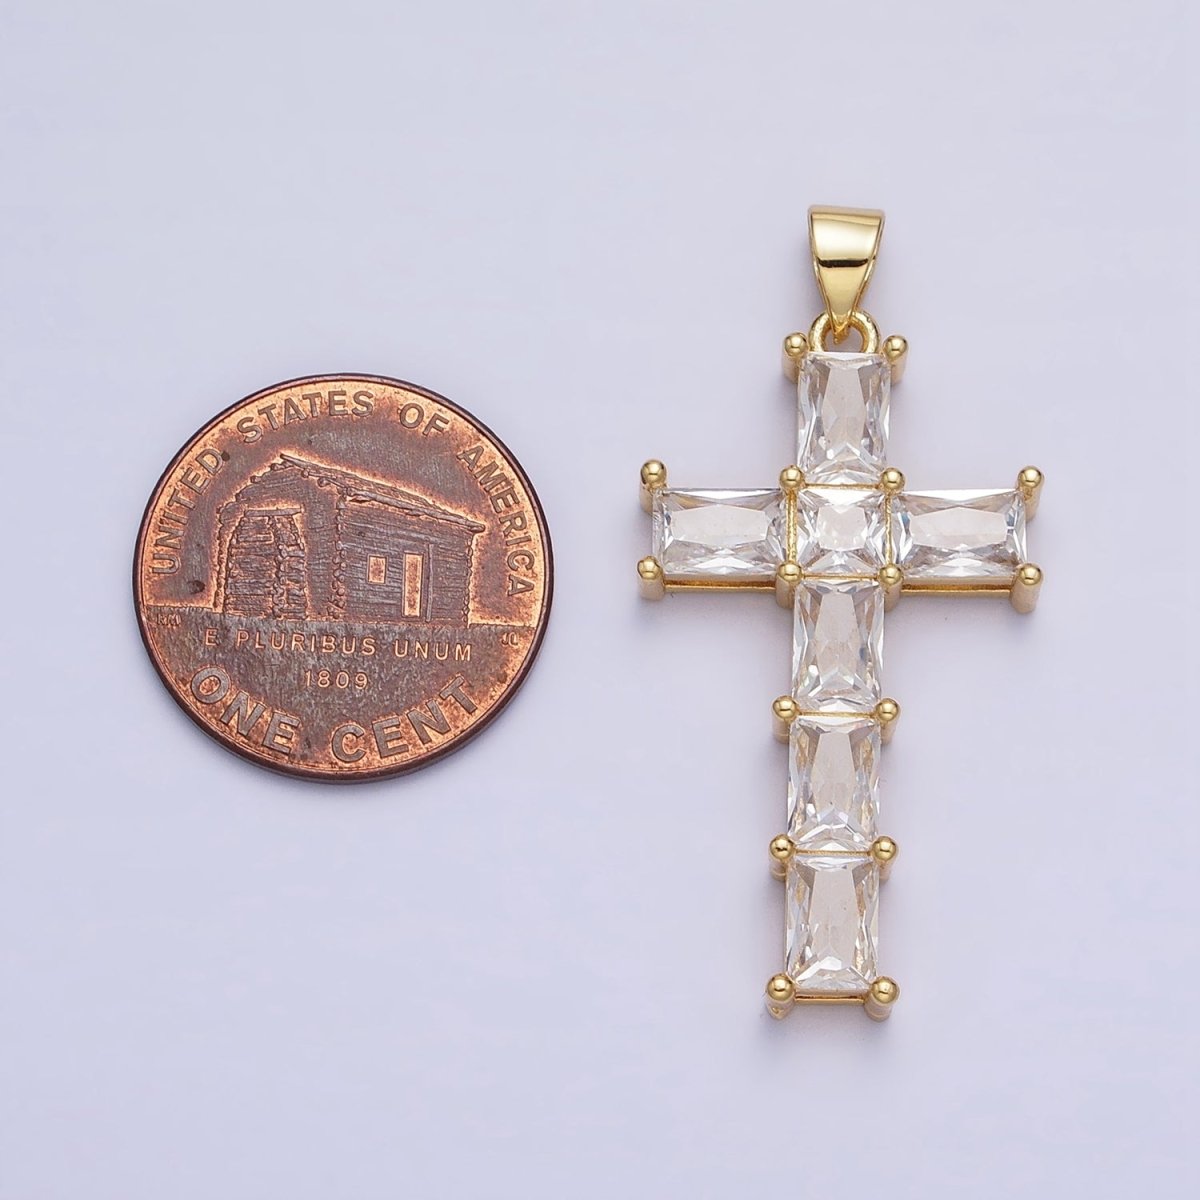 Gold Cross Pendant with Emerald Cut CZ Diamond for Religious Jewelry Charm AA255 - DLUXCA